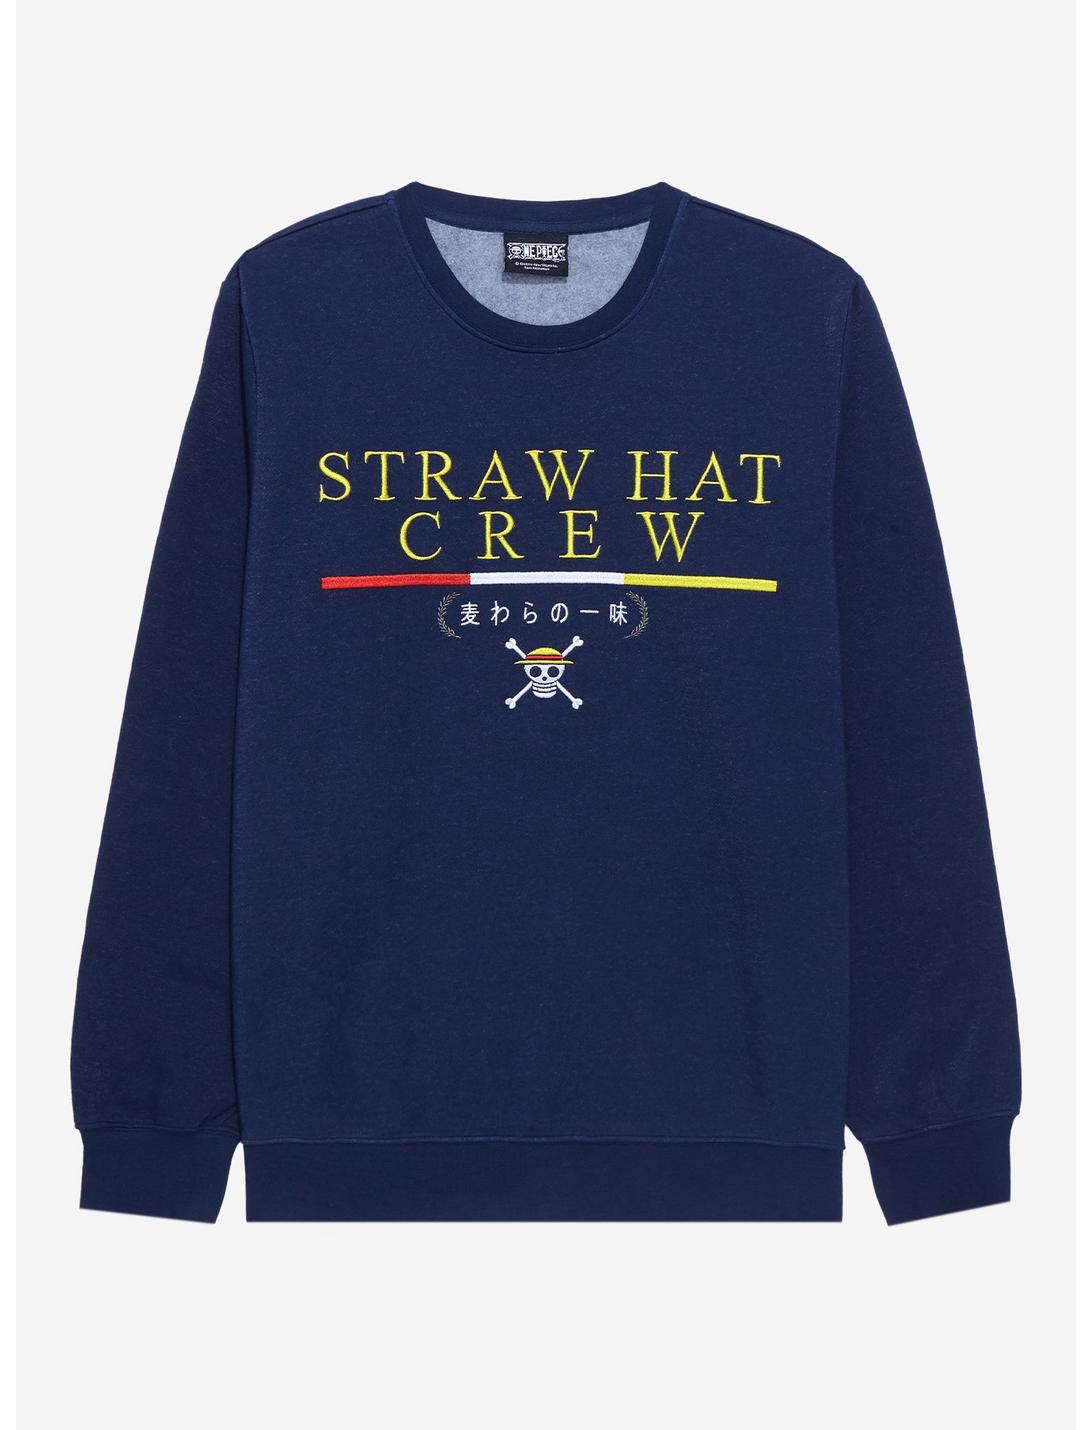 One Piece Straw Hat Crew Collegiate Crewneck - BoxLunch Exclusive, NAVY, hi-res